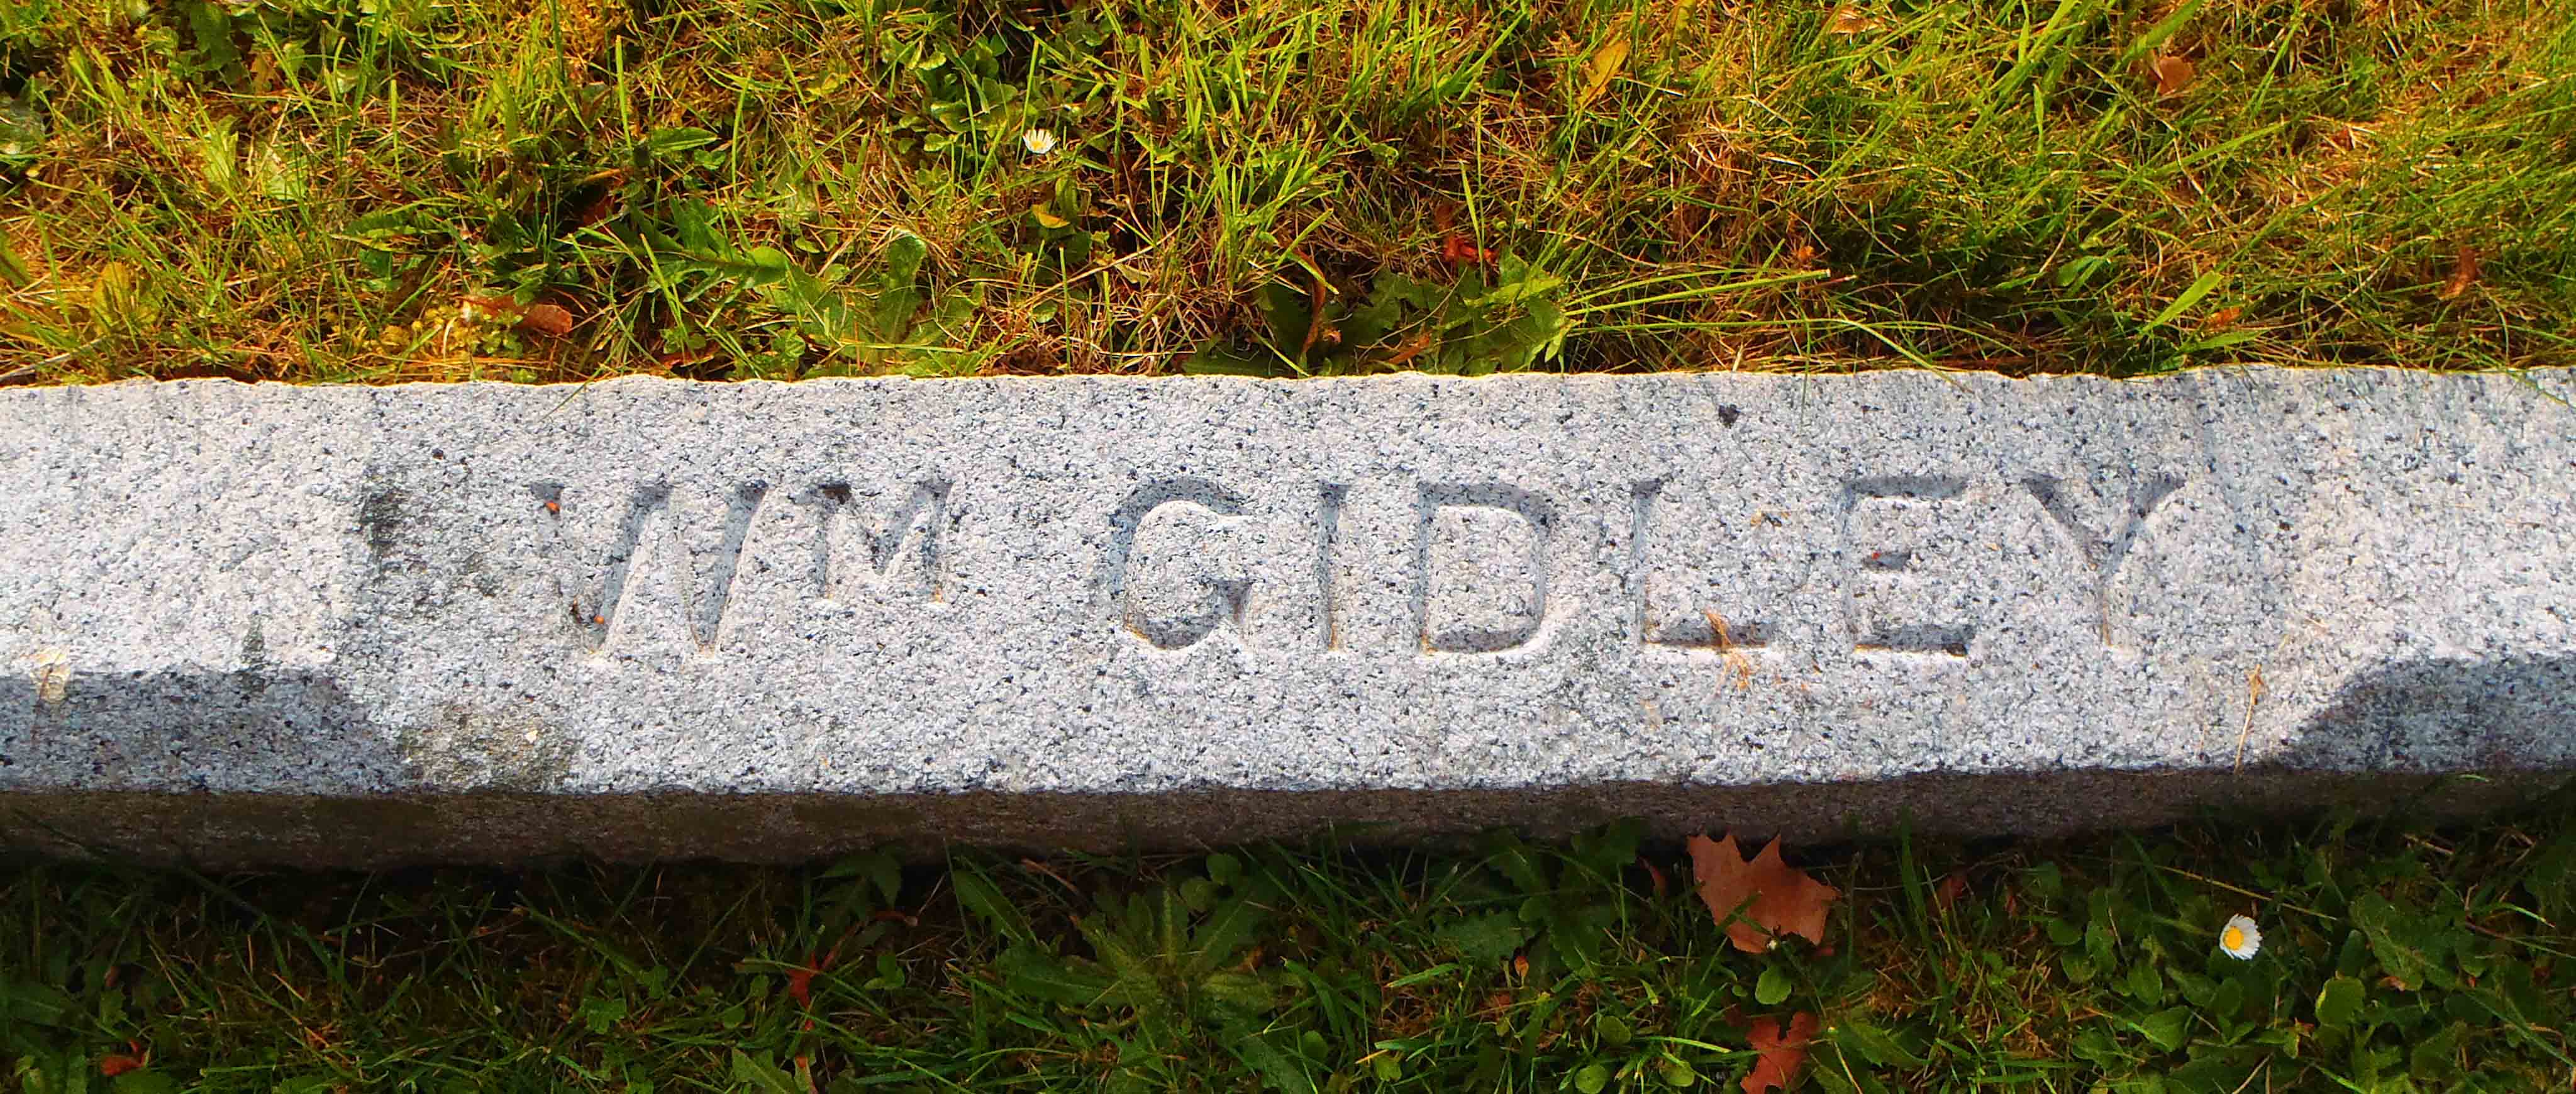 William Gidley tomb inscription